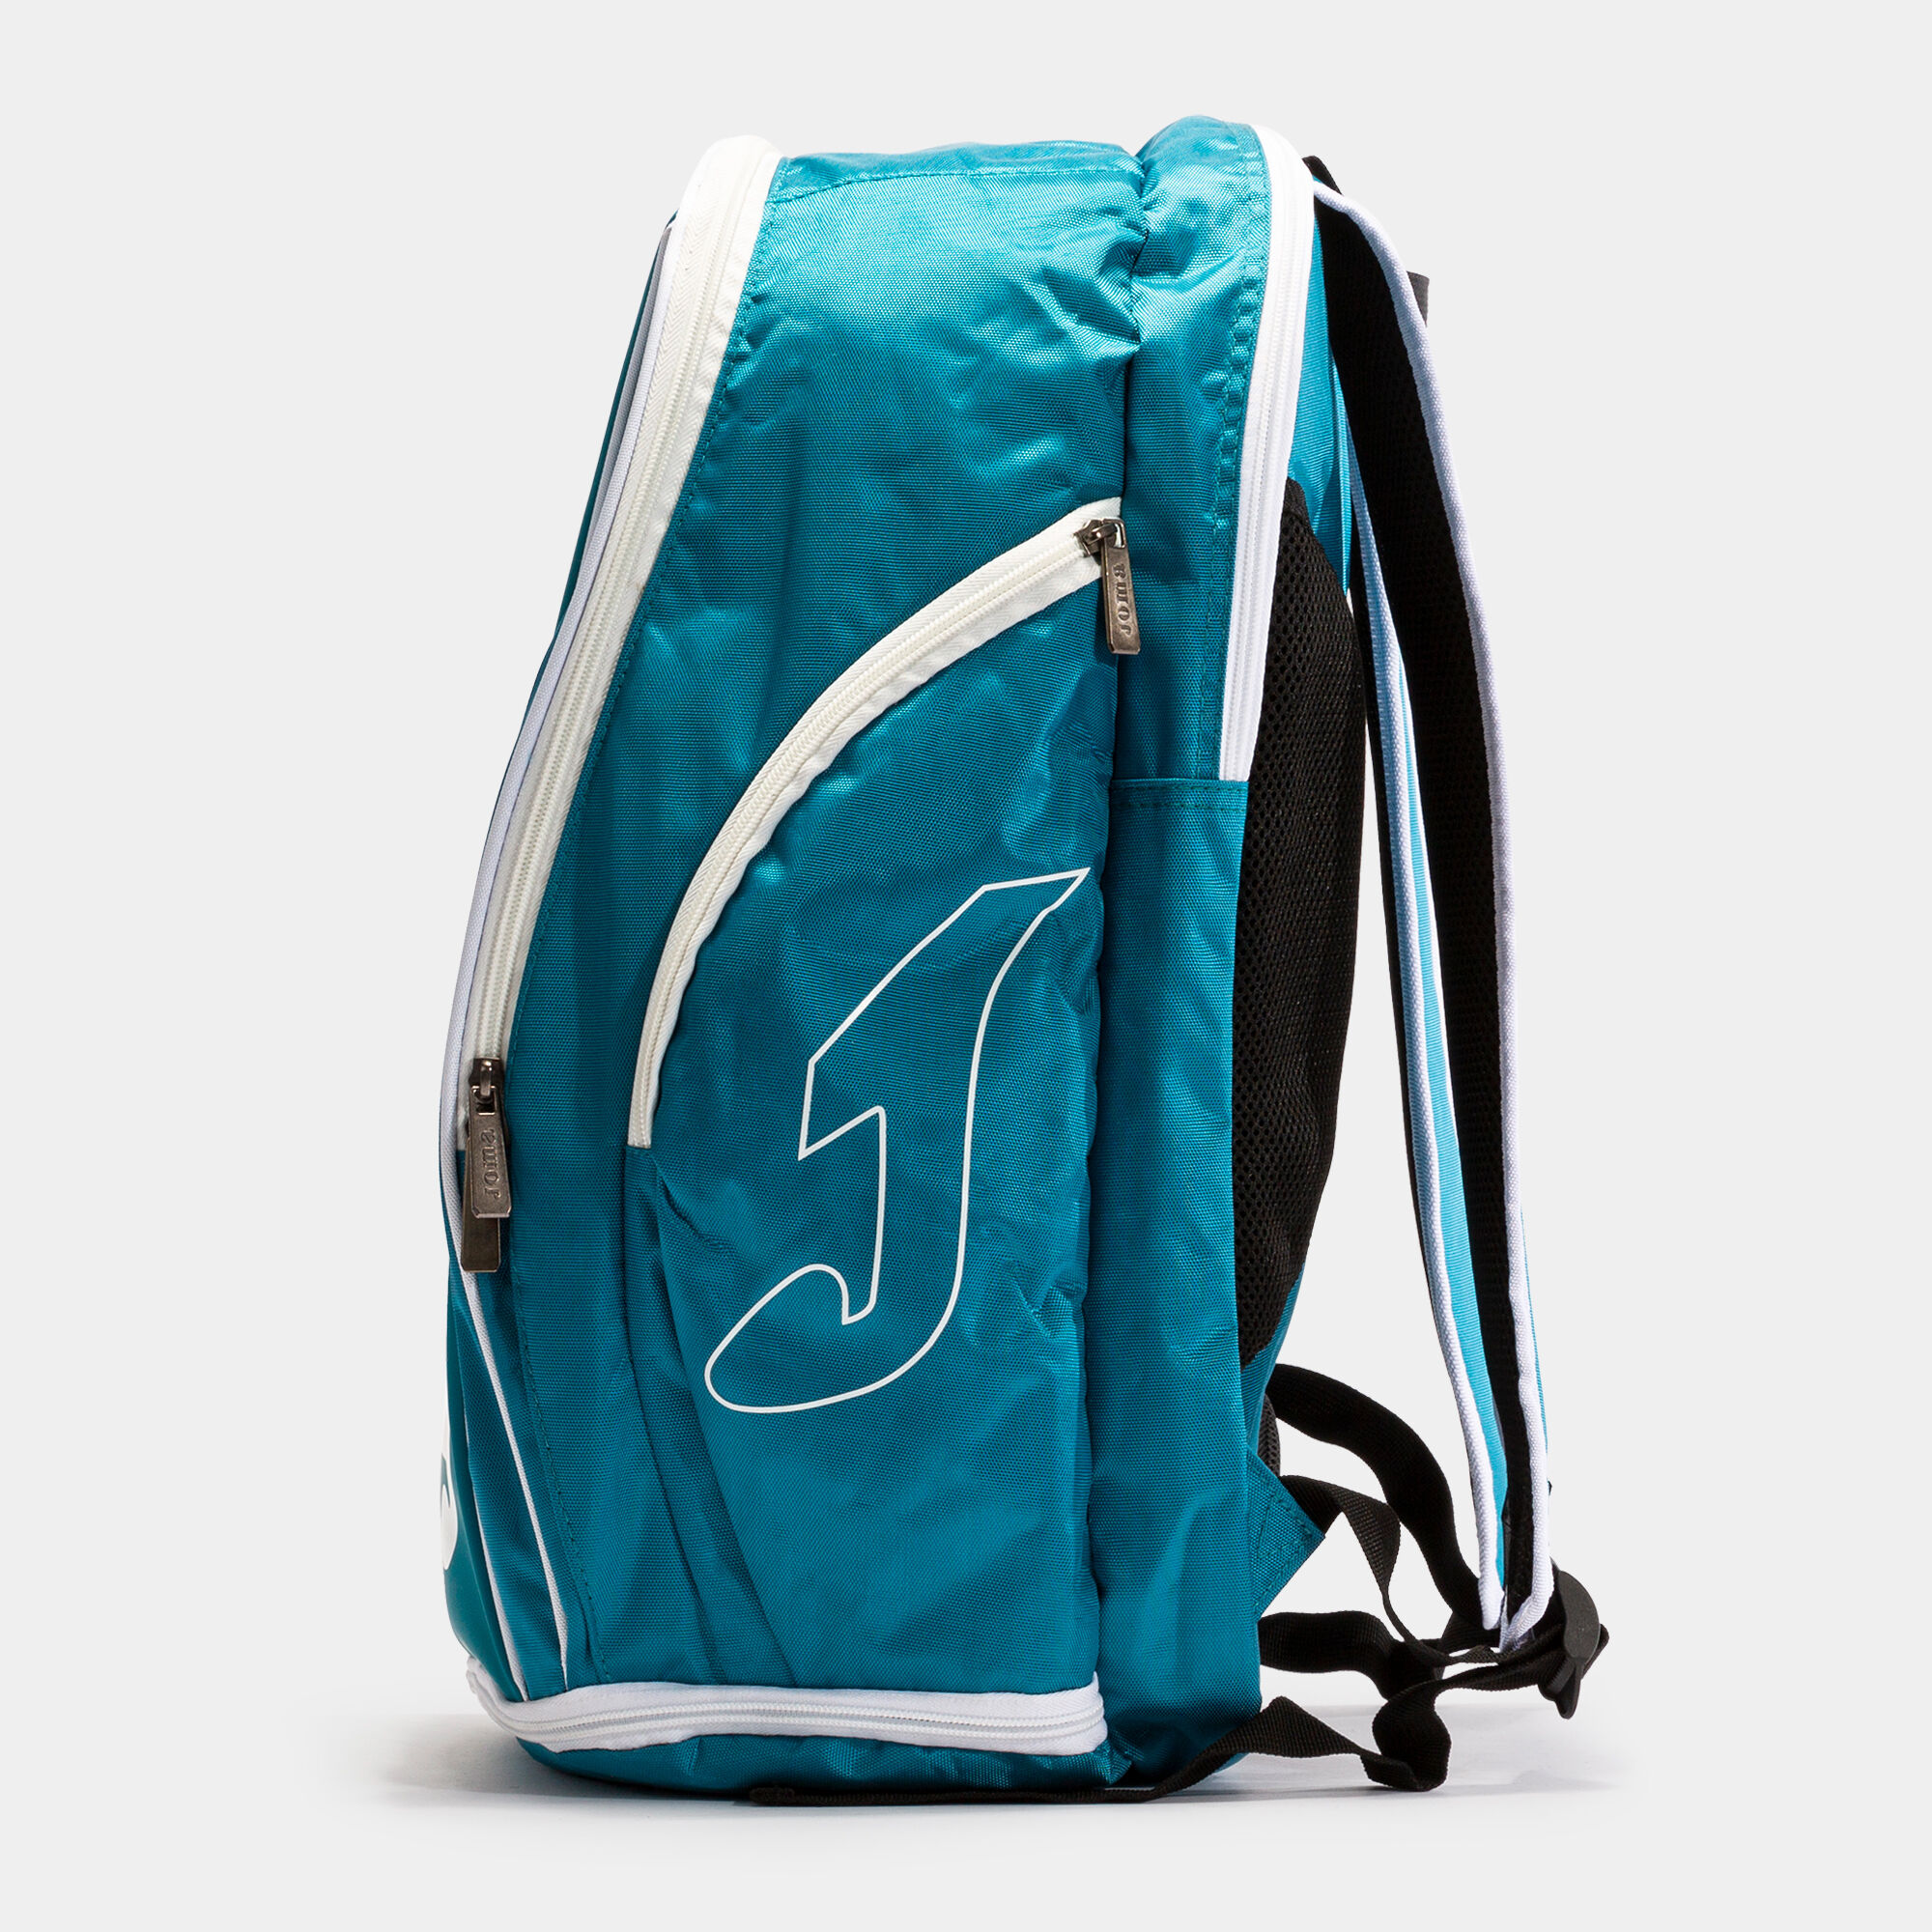 Backpack - shoe bag Open green white